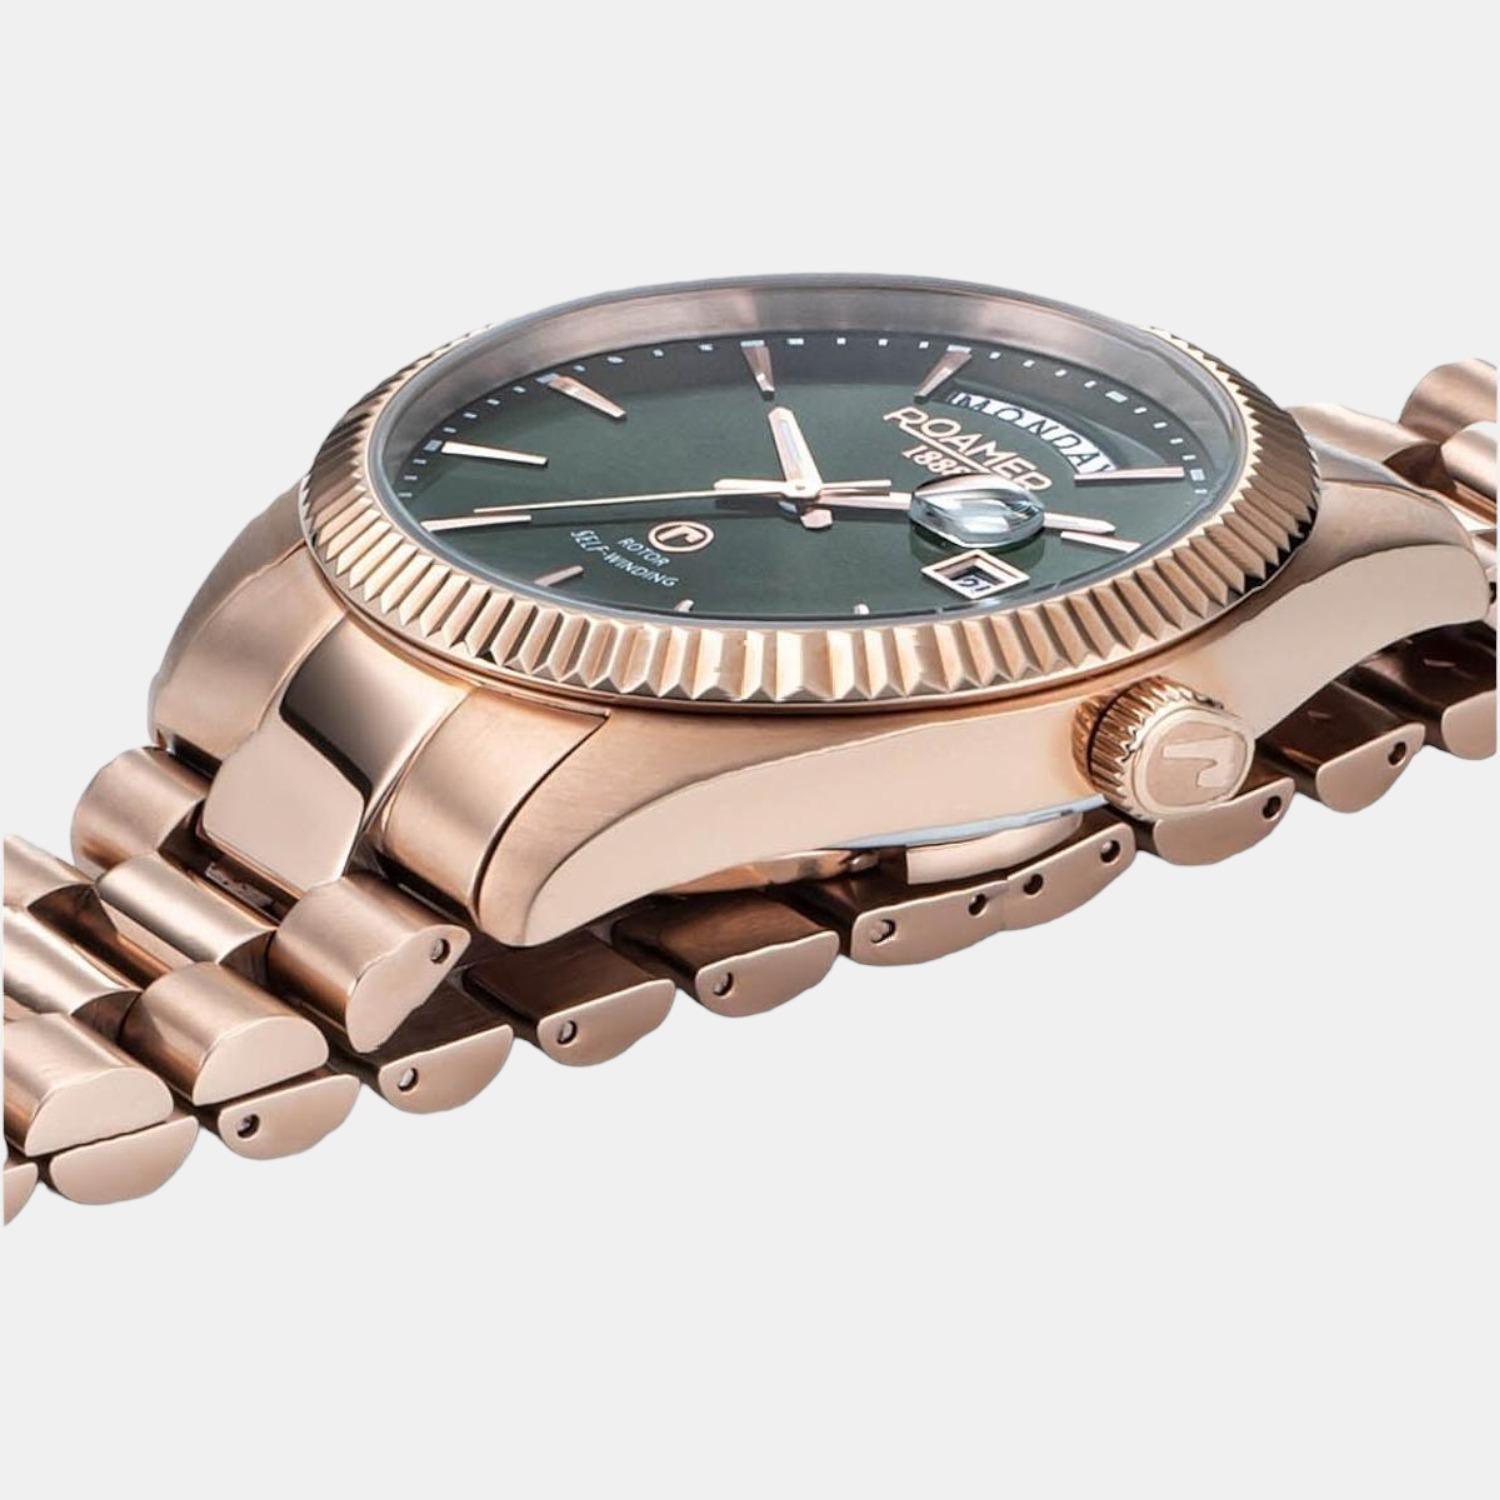 roamer-stainless-steel-green-analog-male-watch-981662-49-75-90